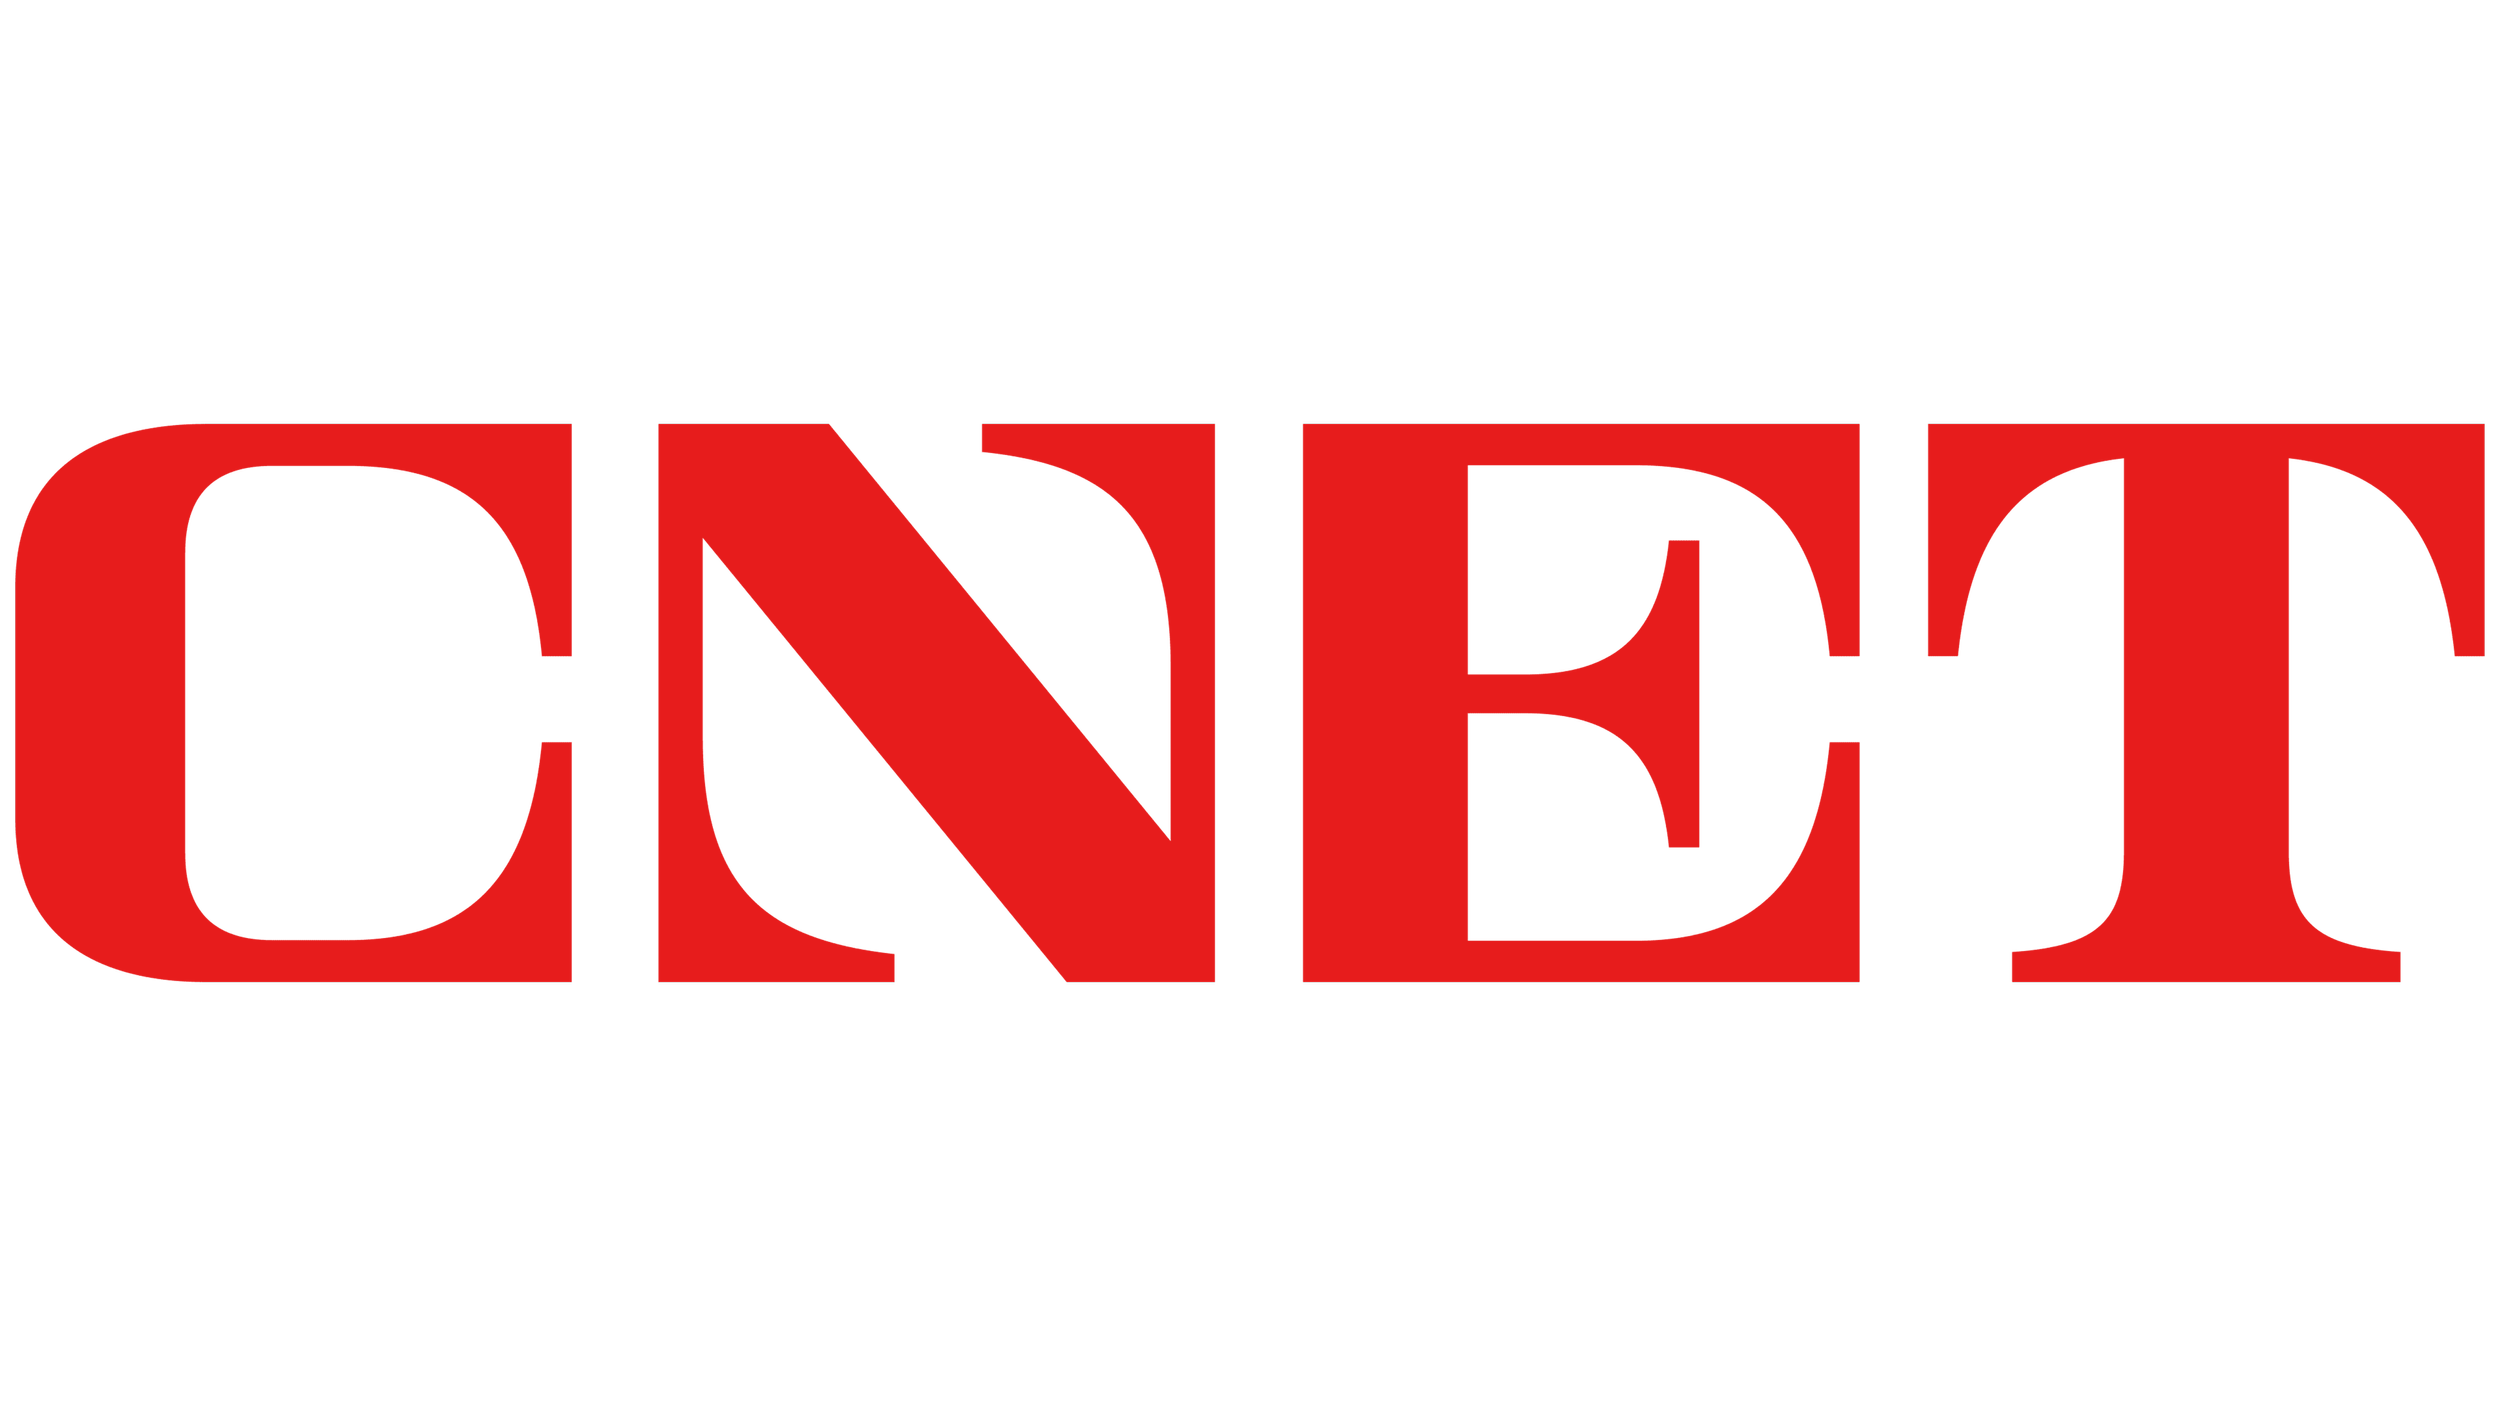 CNET-Logo.png